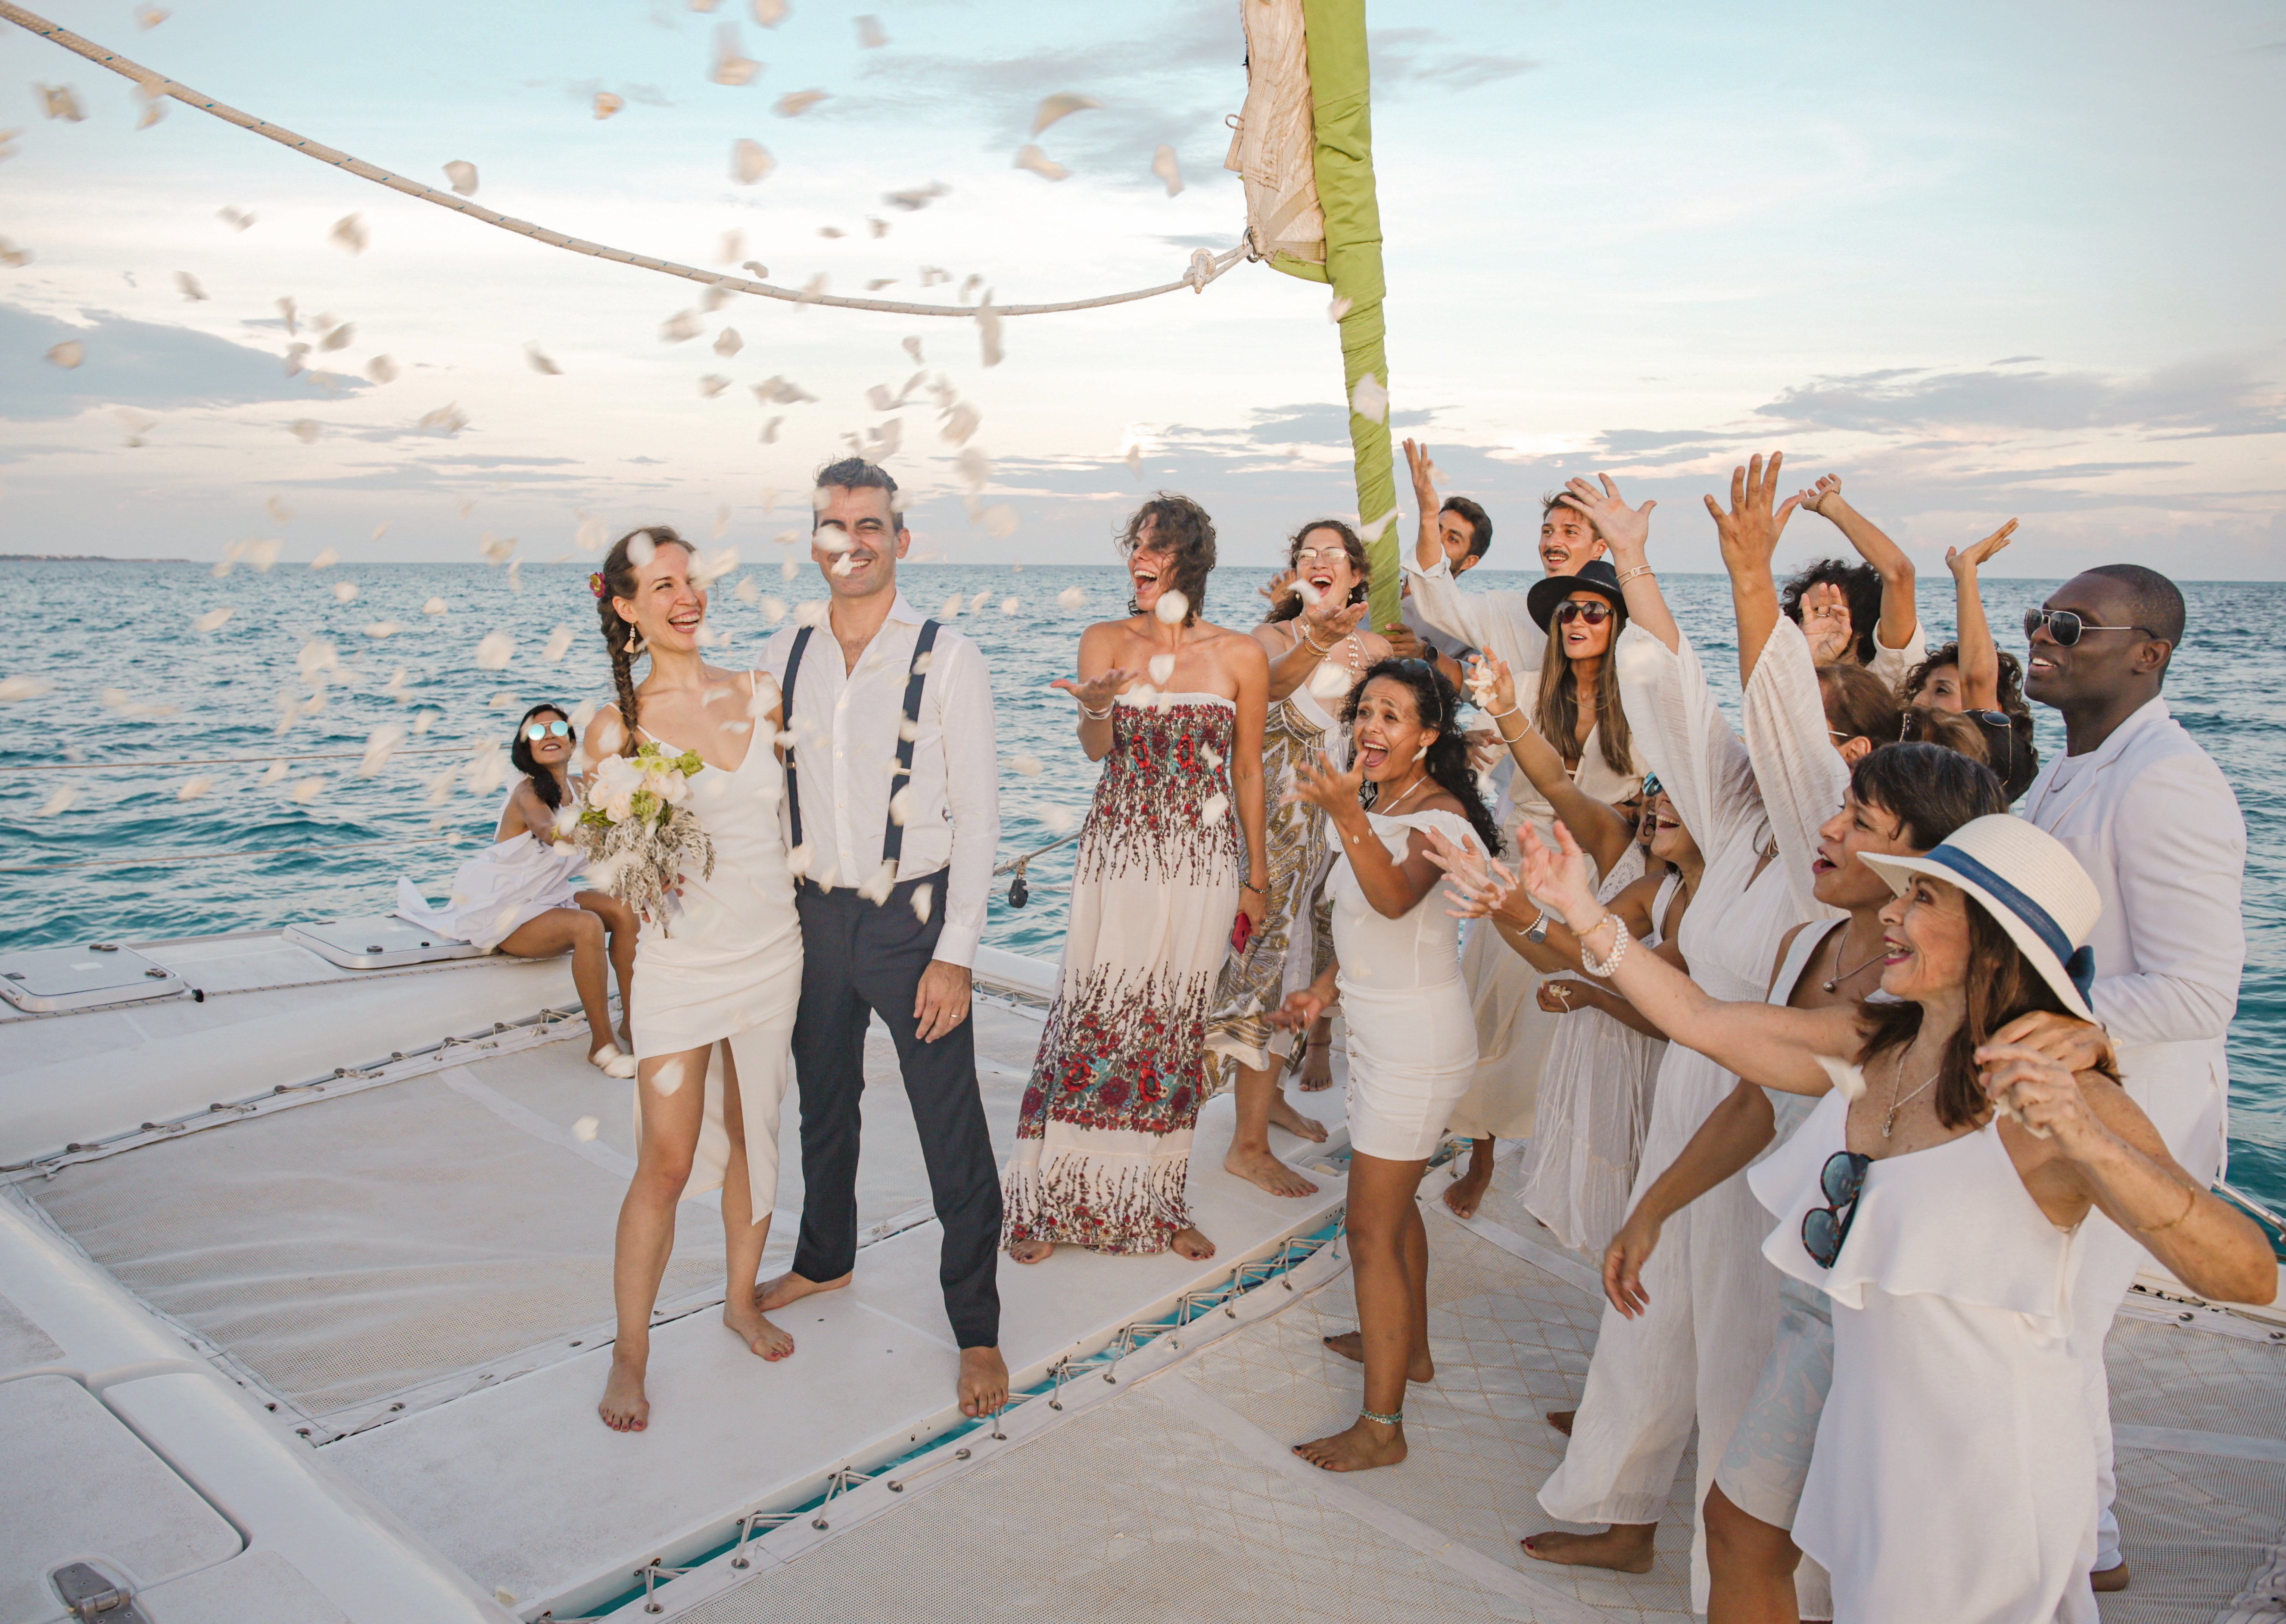 22 - Planning a wedding in Cancun - Cancun Sailing best weddings venues